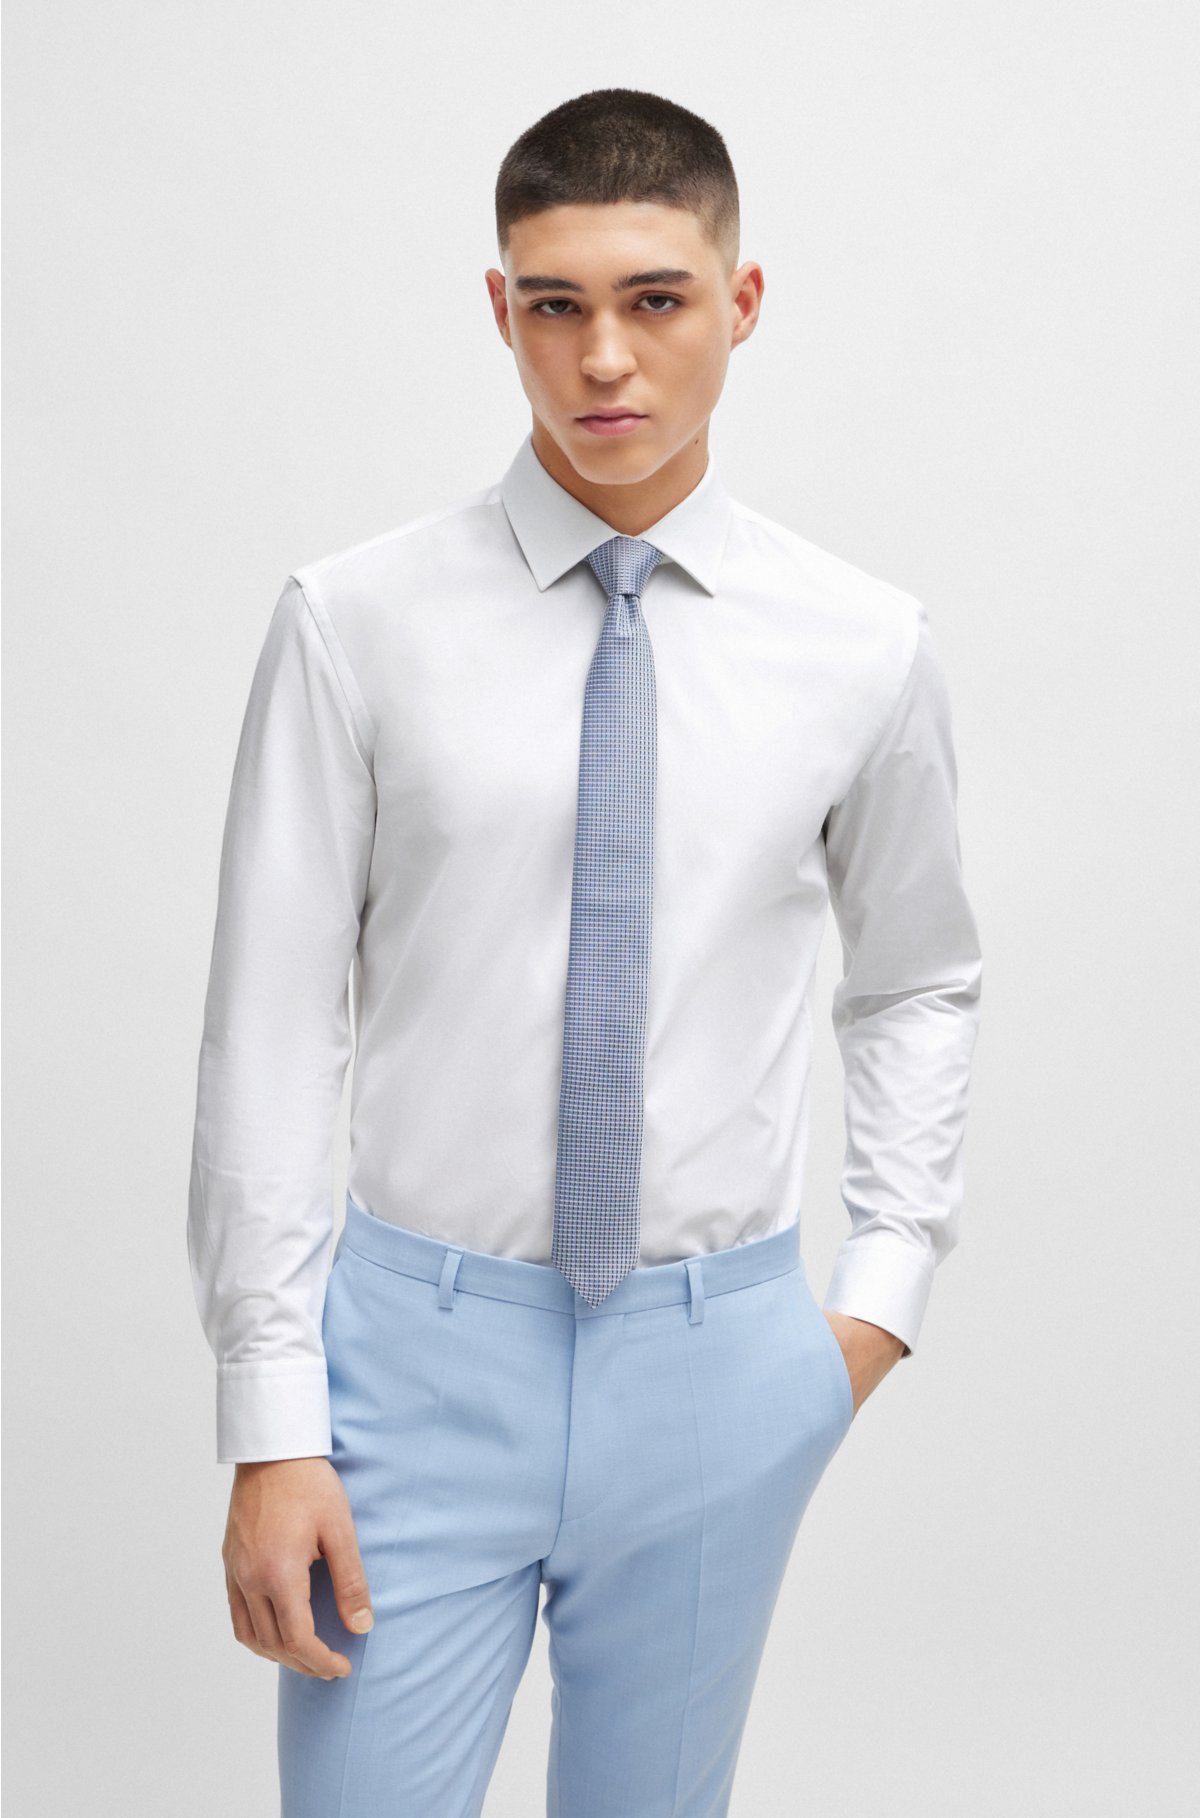 Silk-blend tie with jacquard pattern, Light Blue